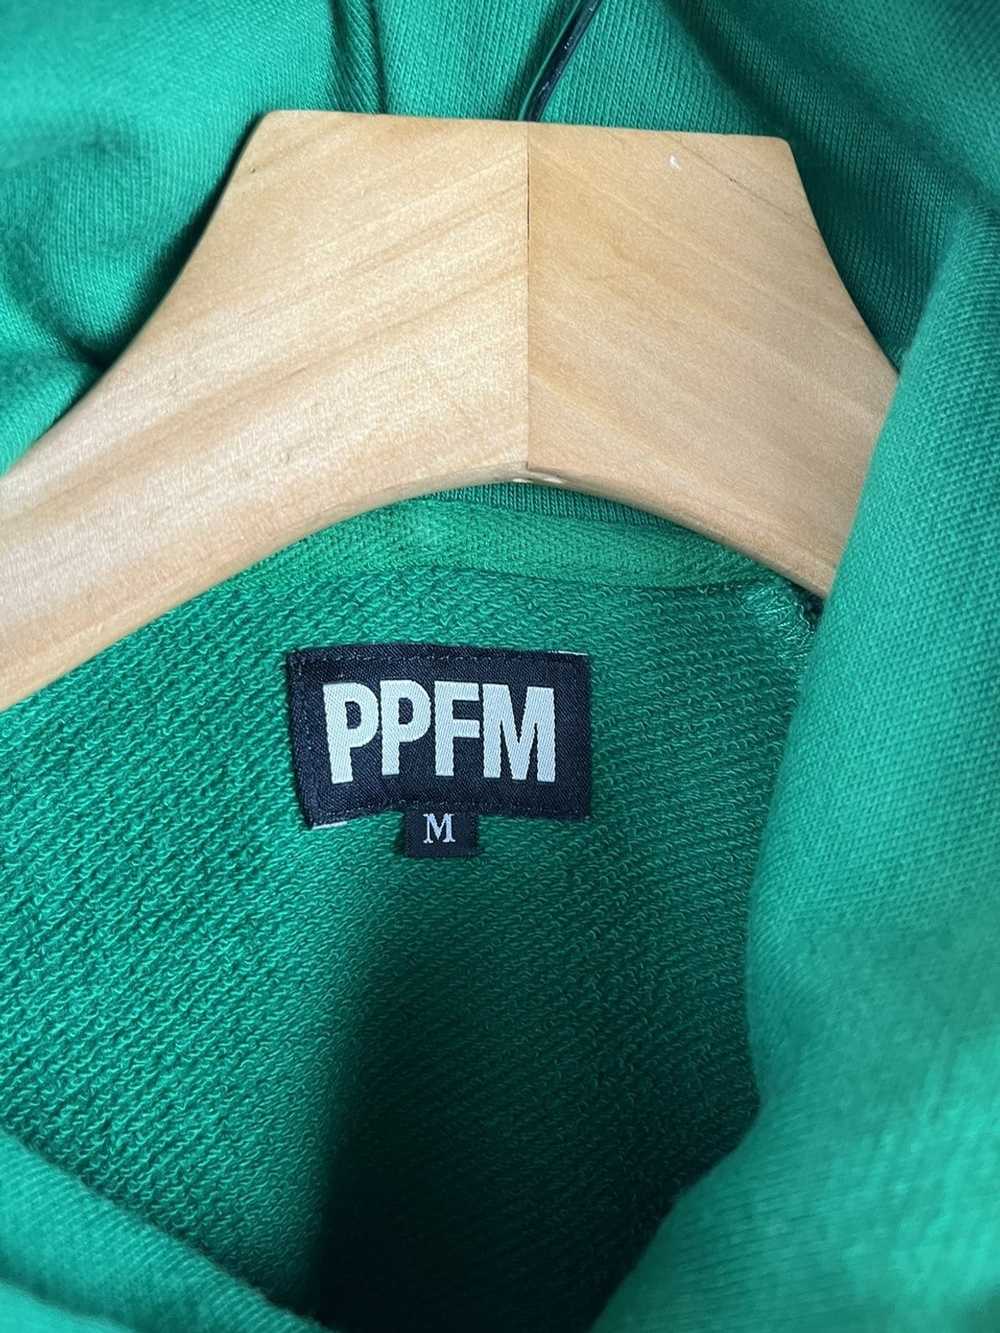 PPFM PPFM University State Jacket - image 3